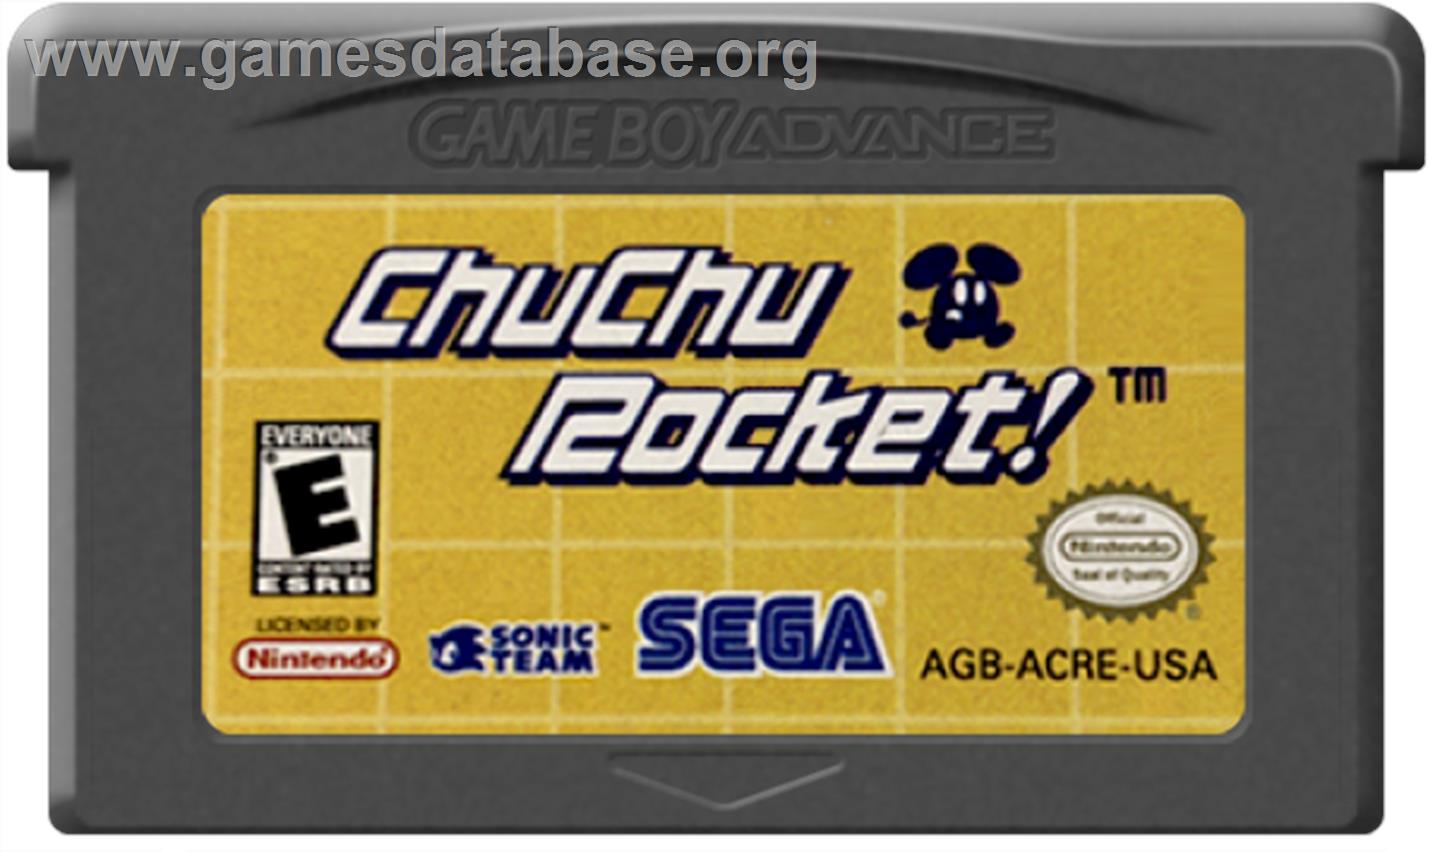 ChuChu Rocket - Nintendo Game Boy Advance - Artwork - Cartridge